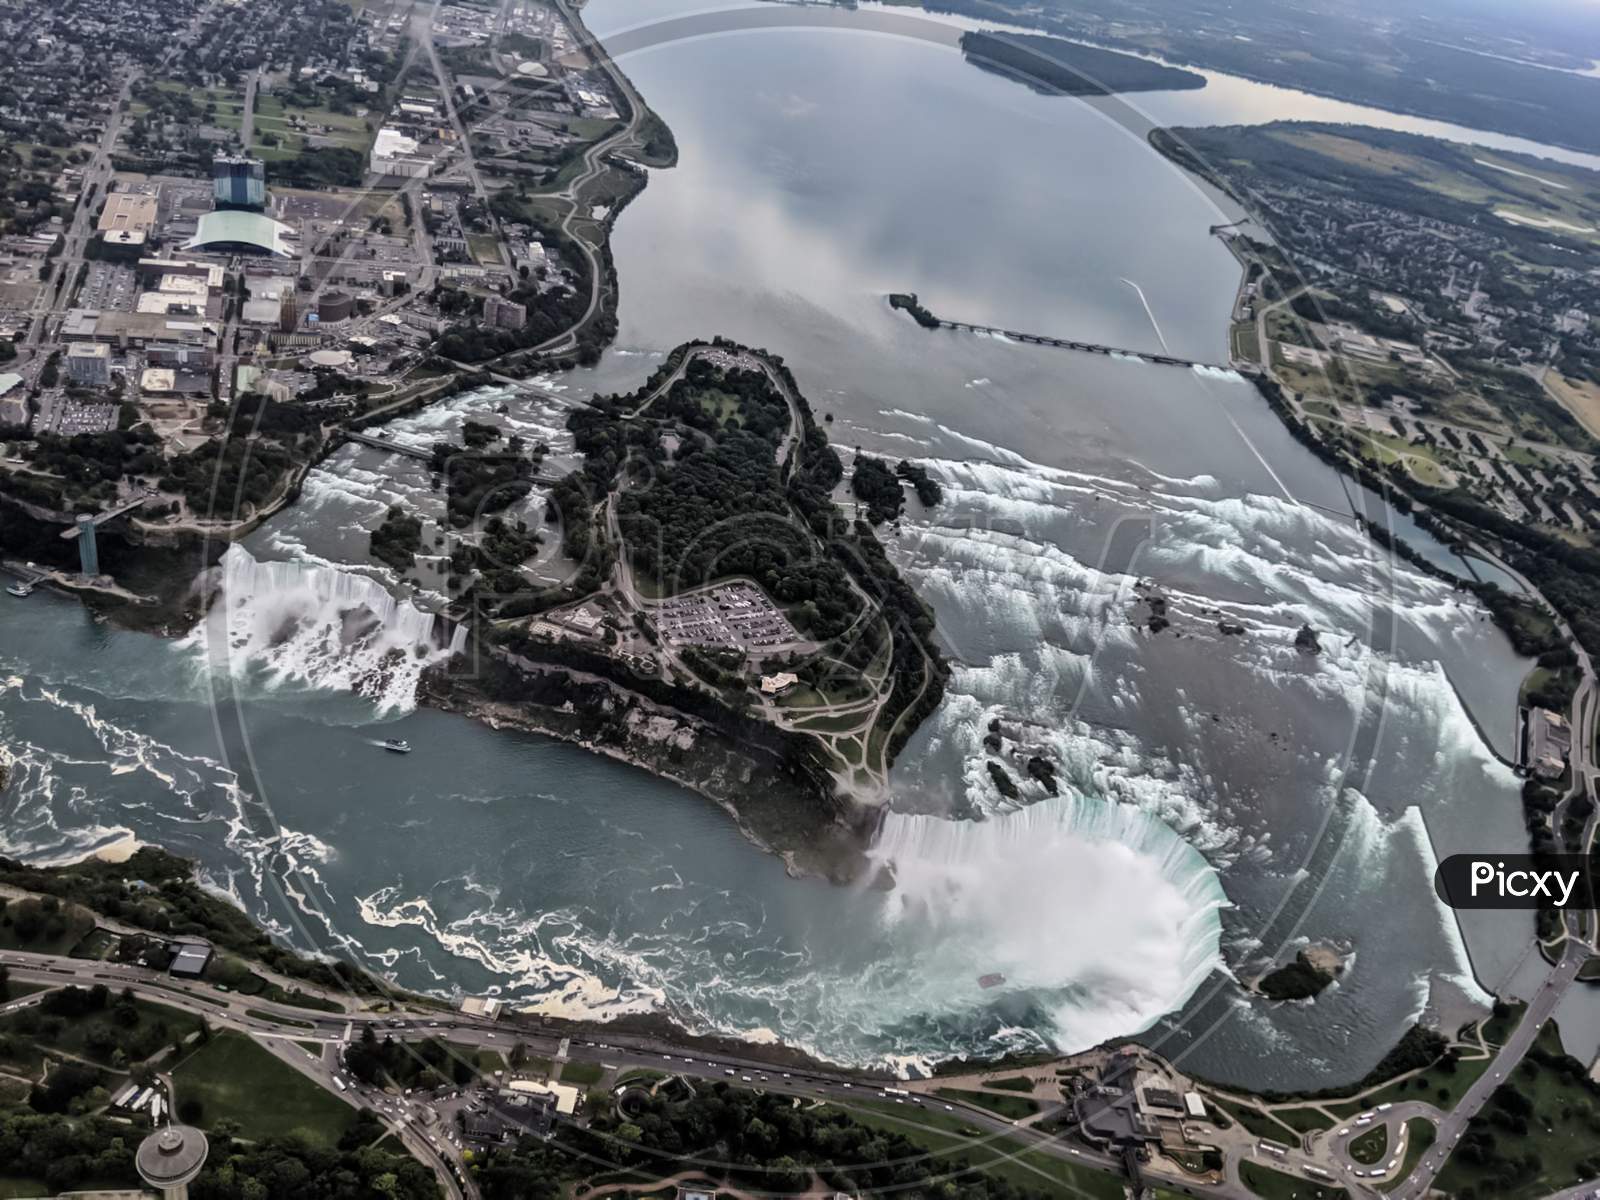 Niagara water falls